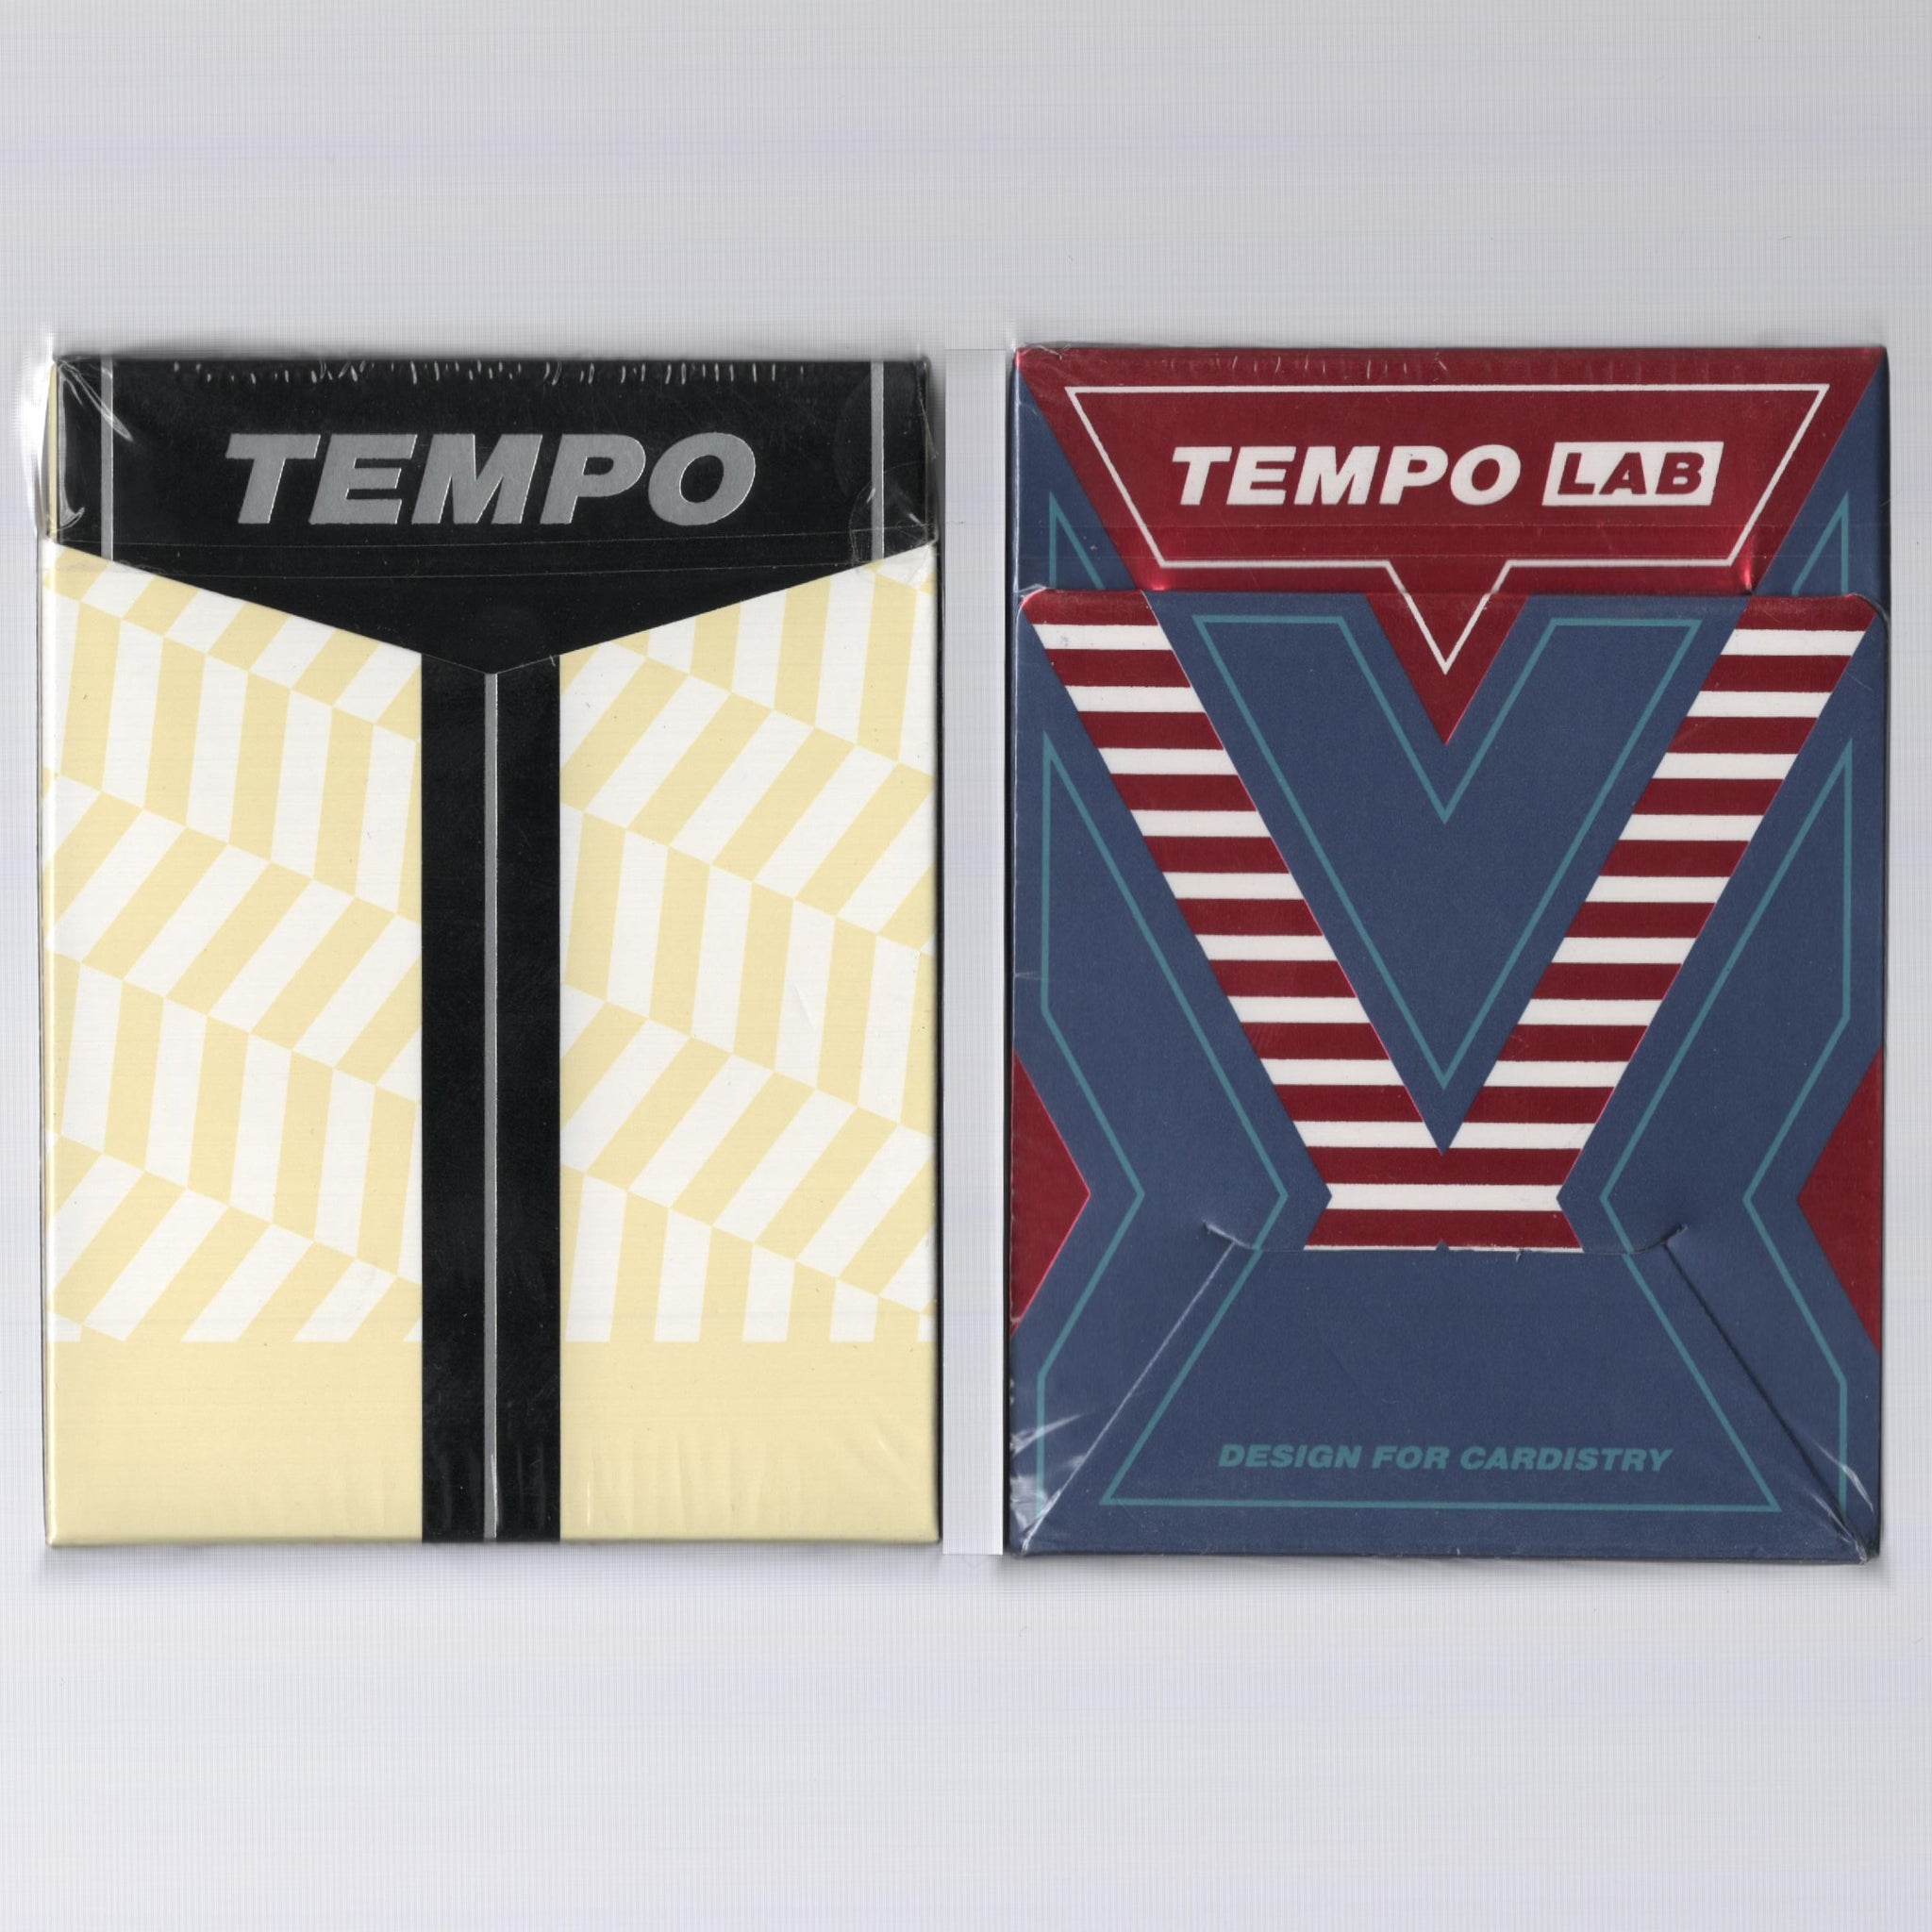 Tempo Original & Lab Original [AUCTION]